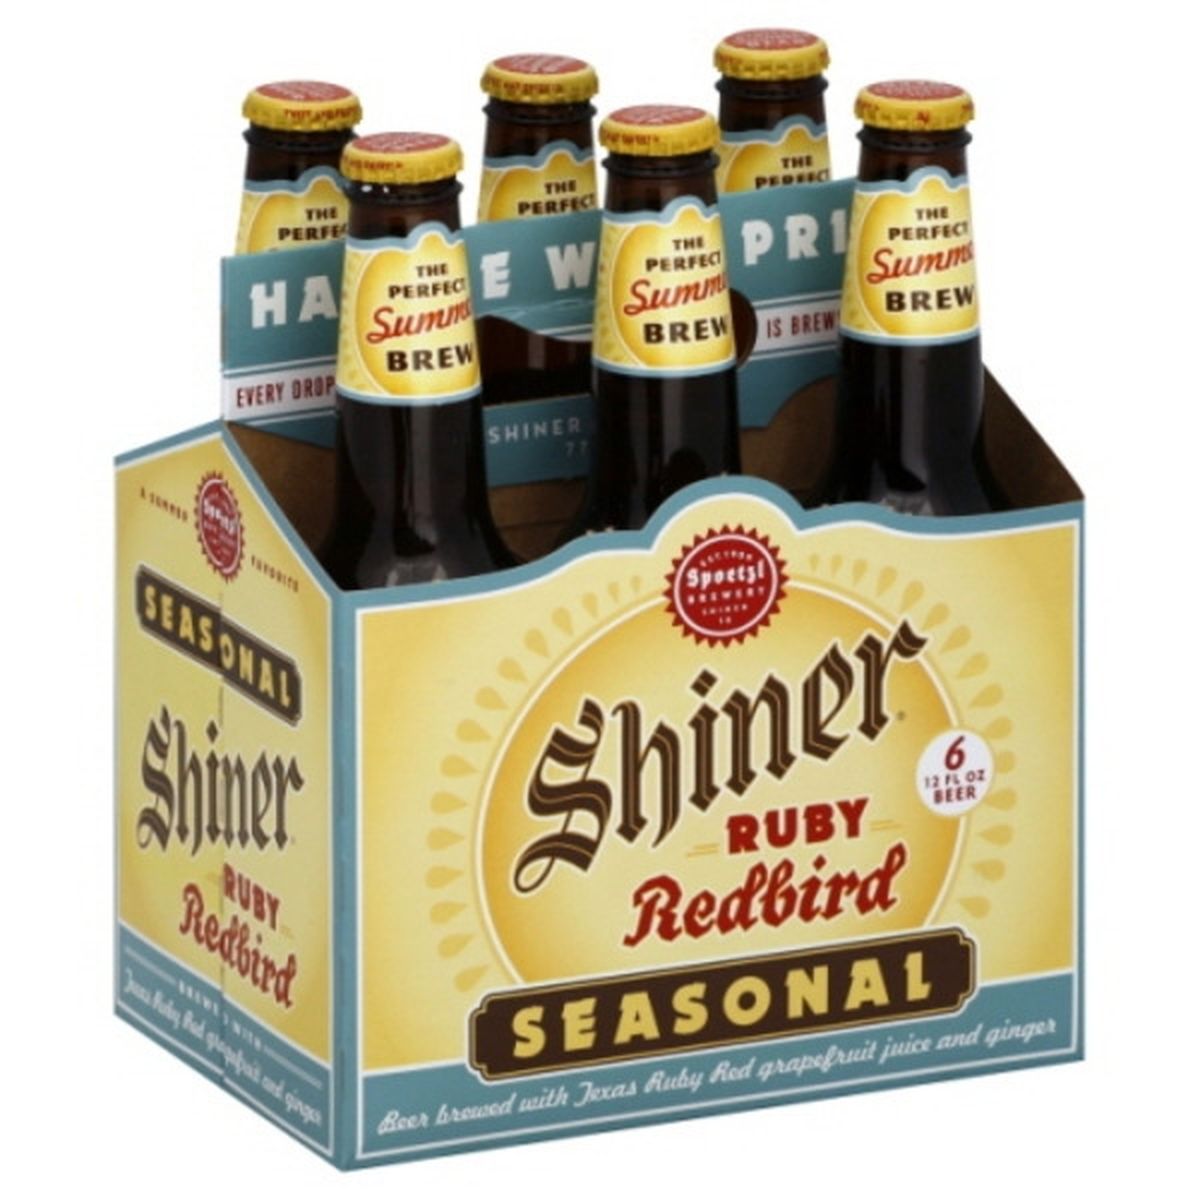 Calories in Shiner Seasonal Beer 6pk/12oz bottles